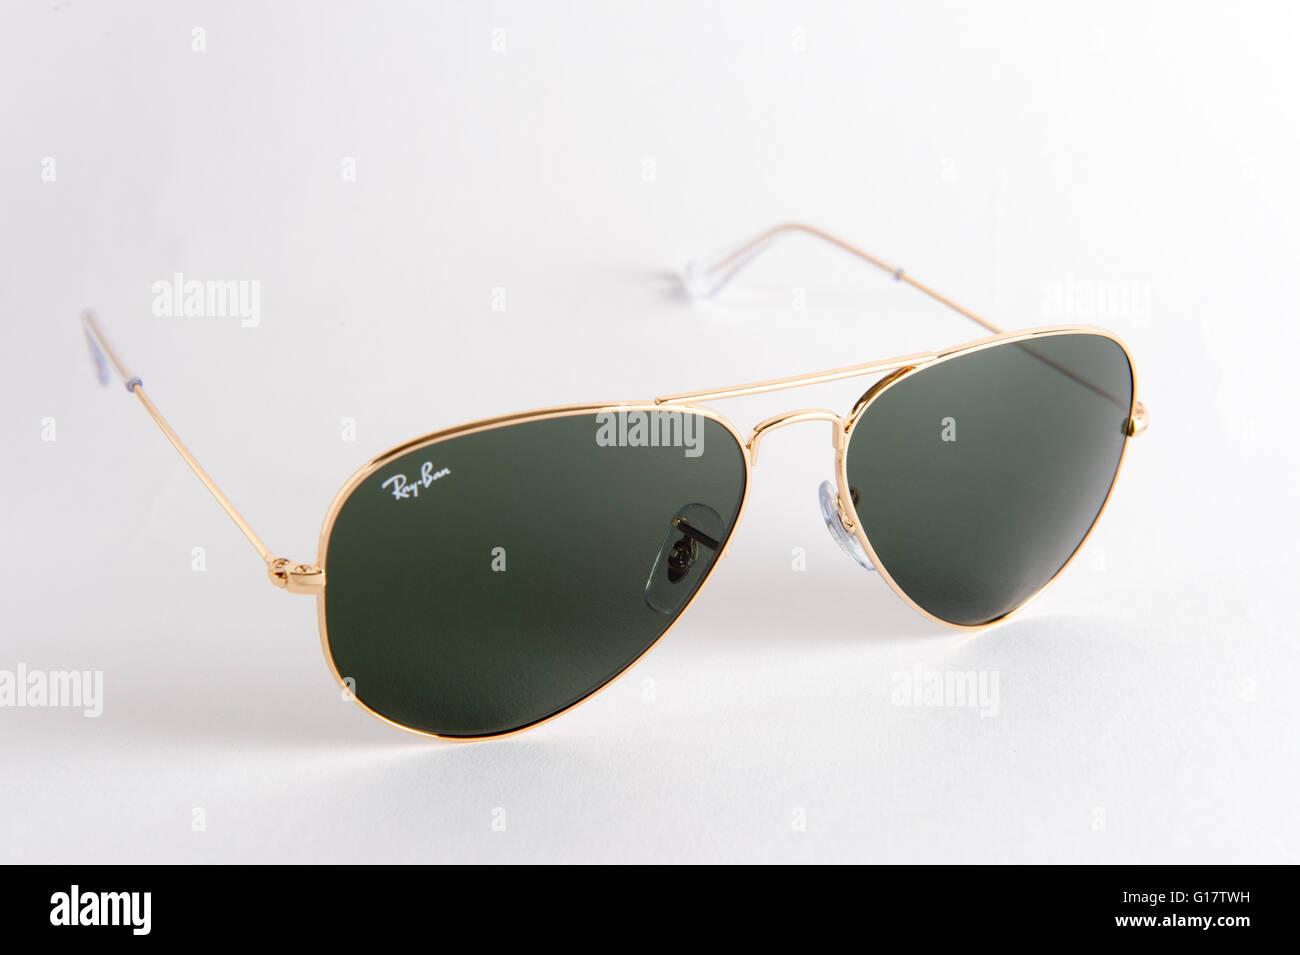 Classic Ray Ban Aviator sunglasses Stock Photo - Alamy